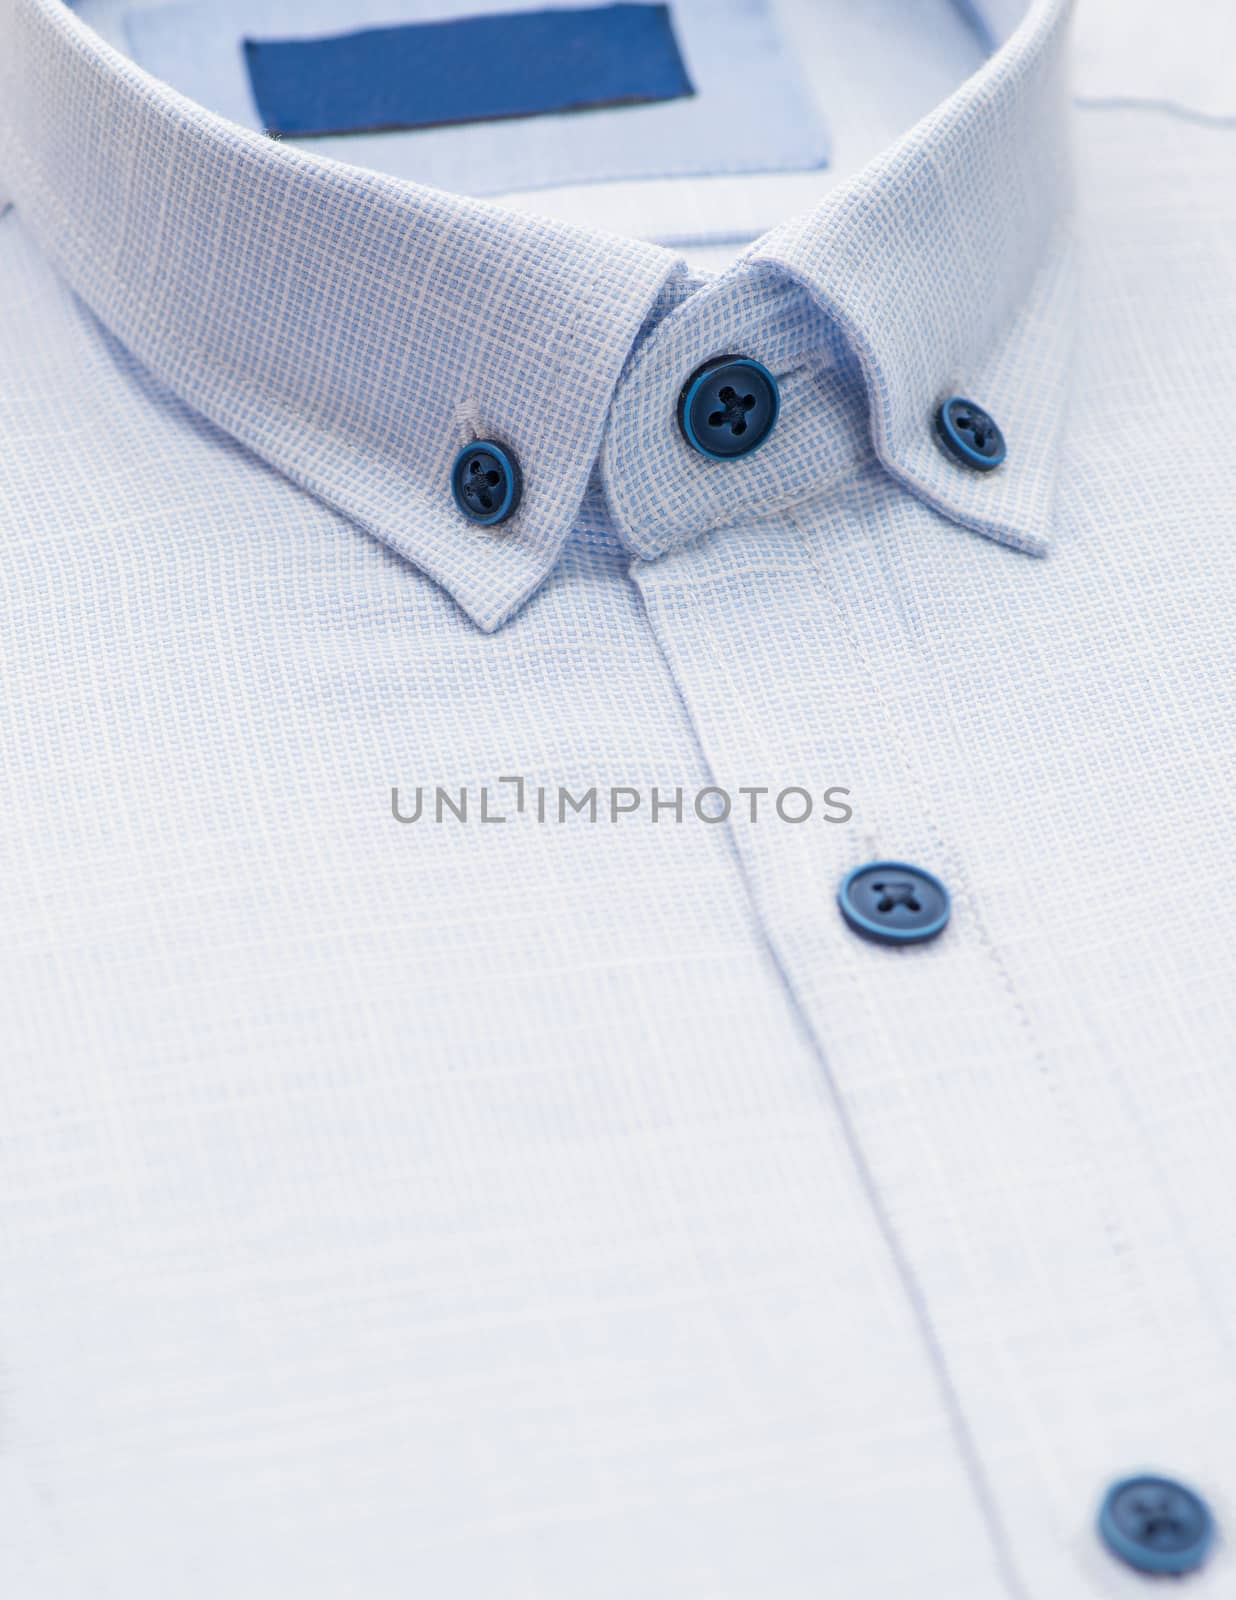 cotton shirt, close-up by A_Karim